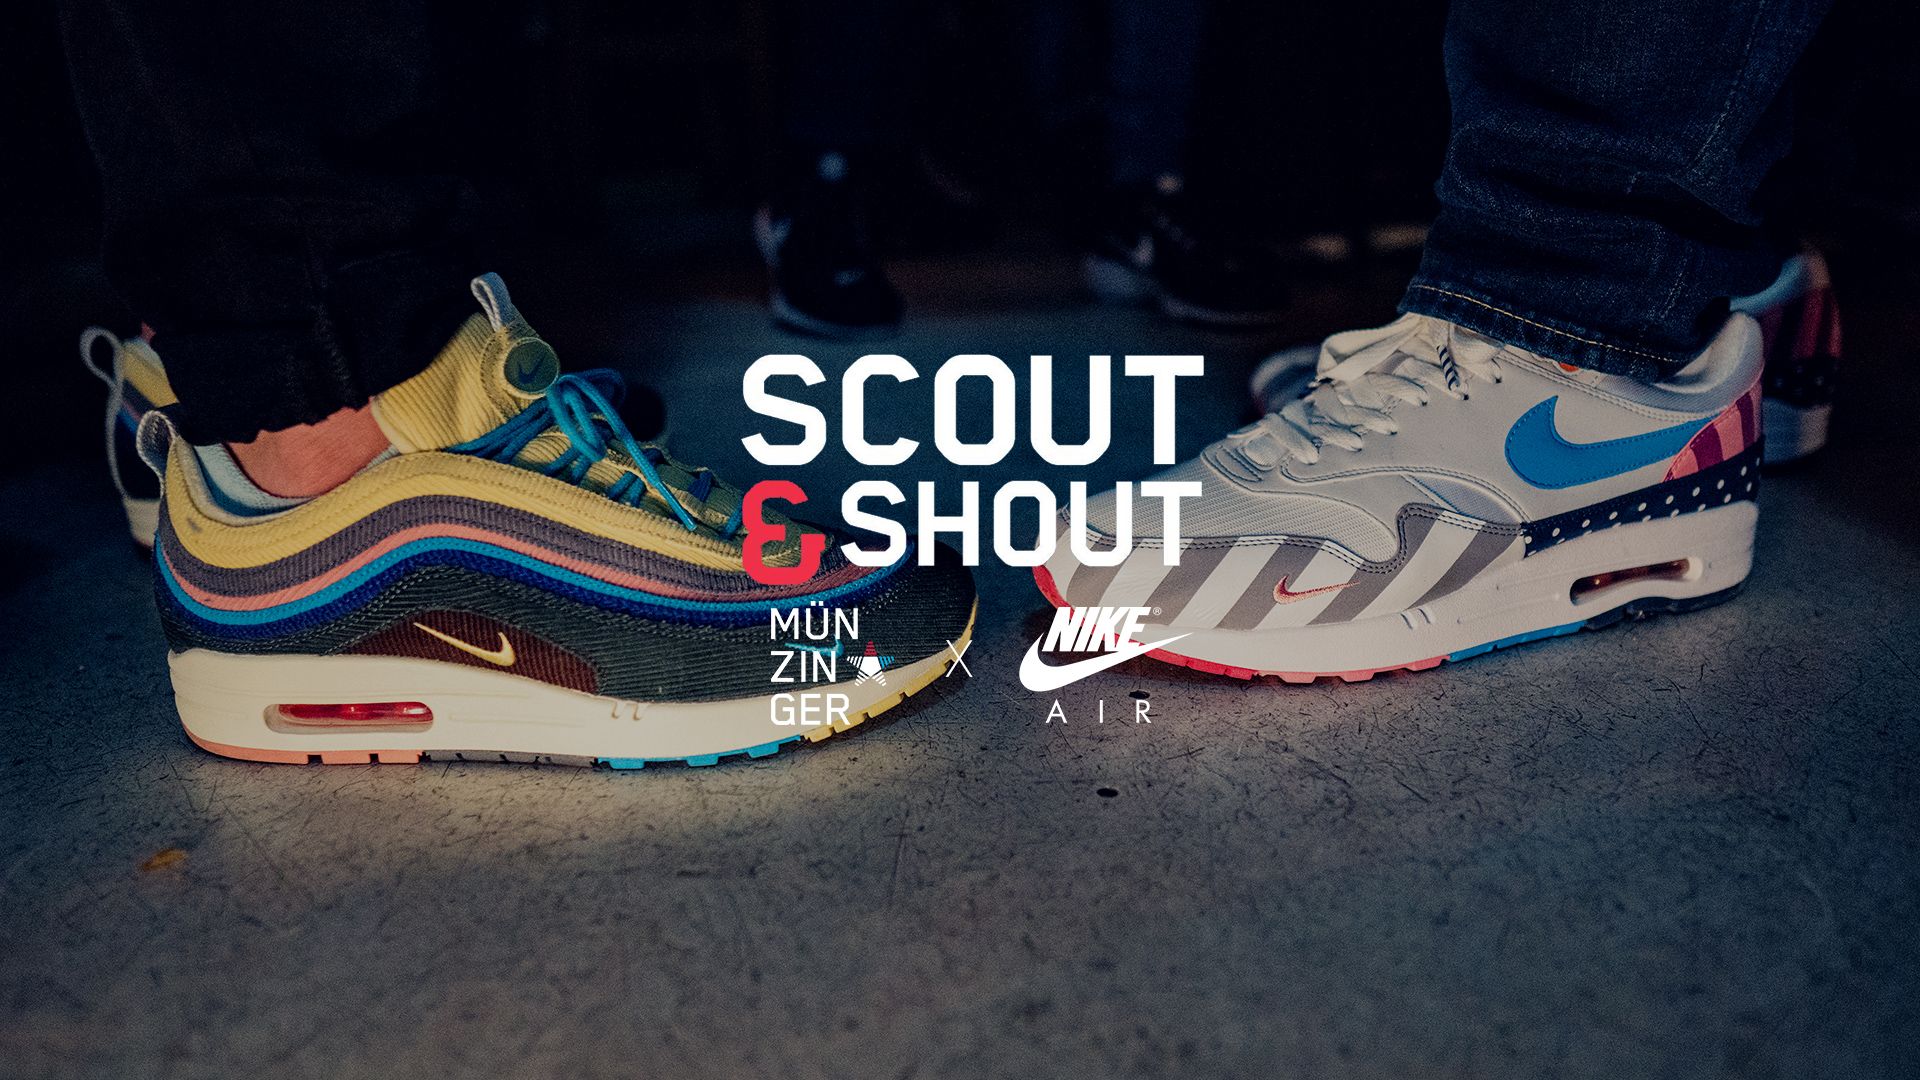  Geile Nike Hintergrundbild 1920x1080. Scout&Shout App Opening Party pres. Münzinger x Nike Air